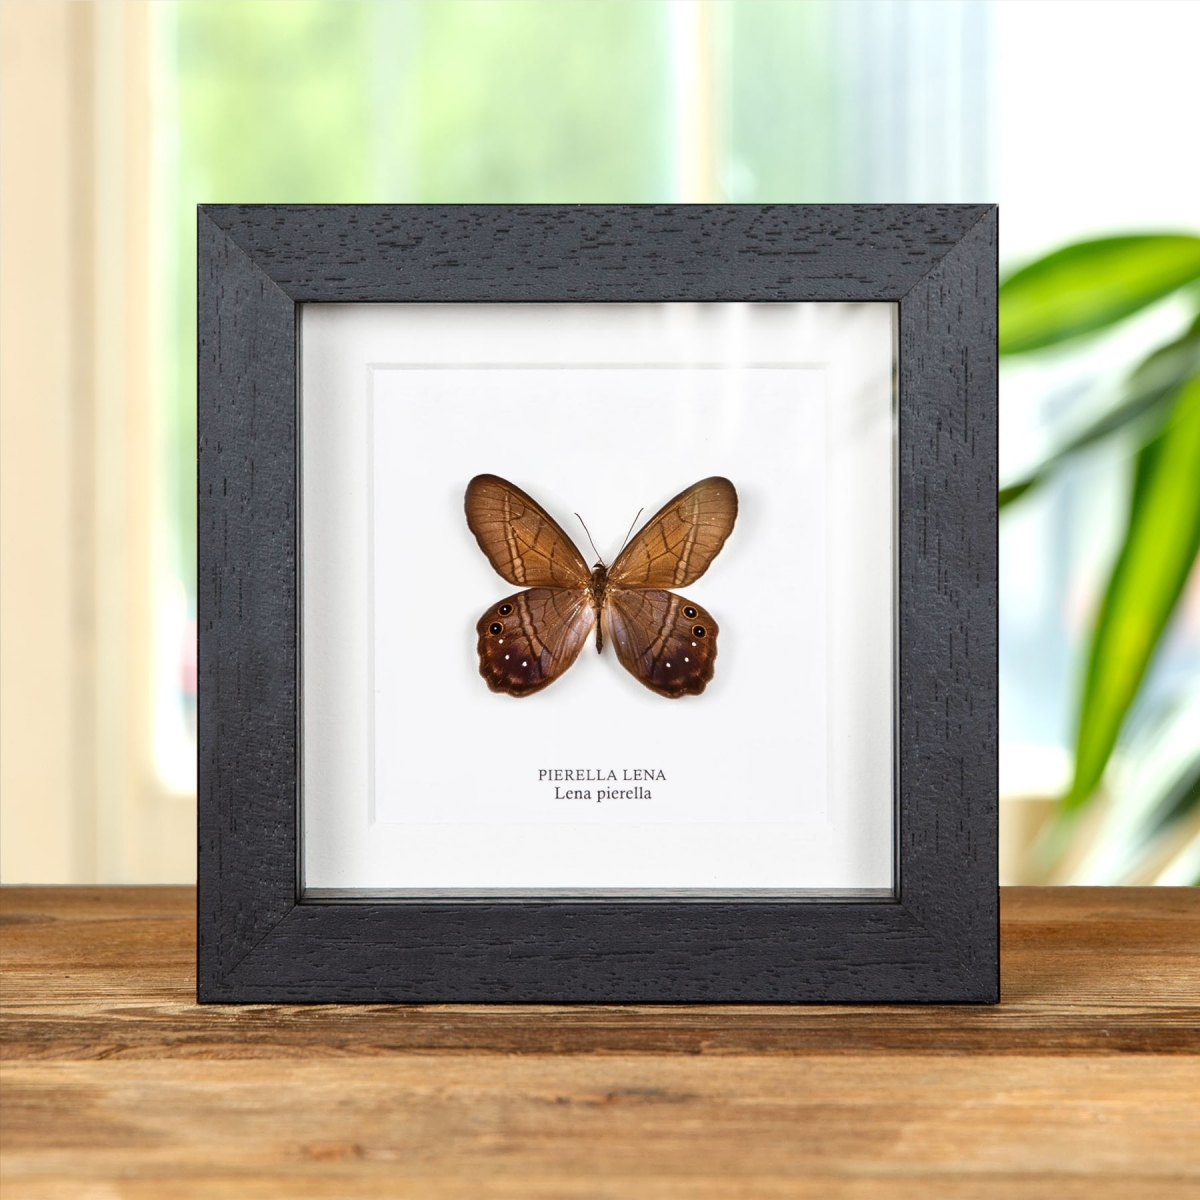 Minibeast Lena Pierella Butterfly In Box Frame (Pierella lena)